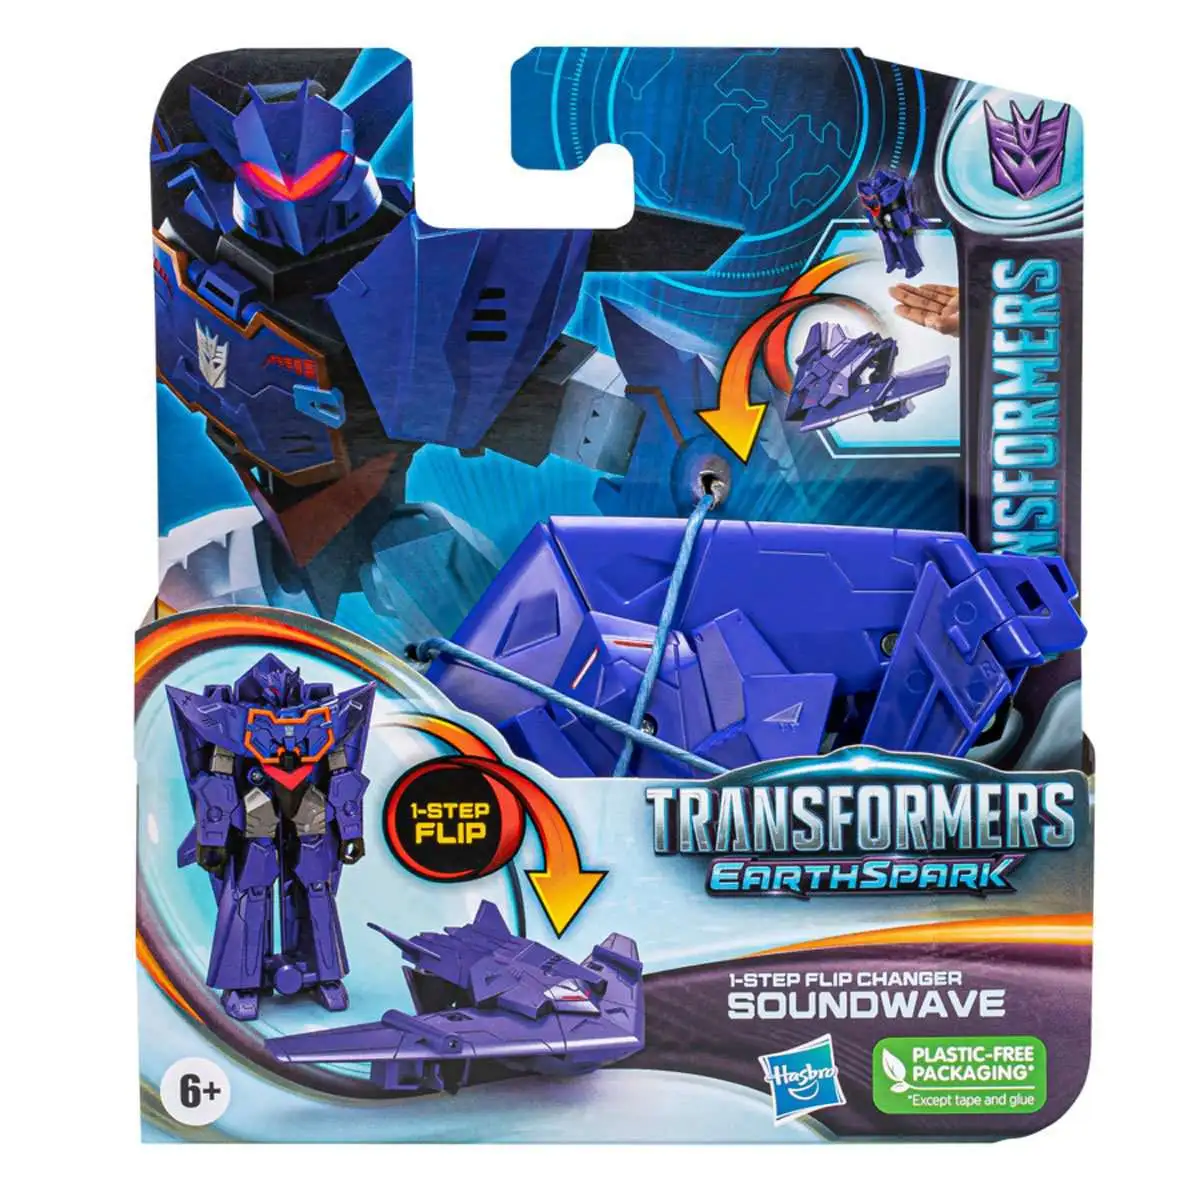 Soundwave with Laserbeak Deluxe (Transformers RID Prime, Hasbro